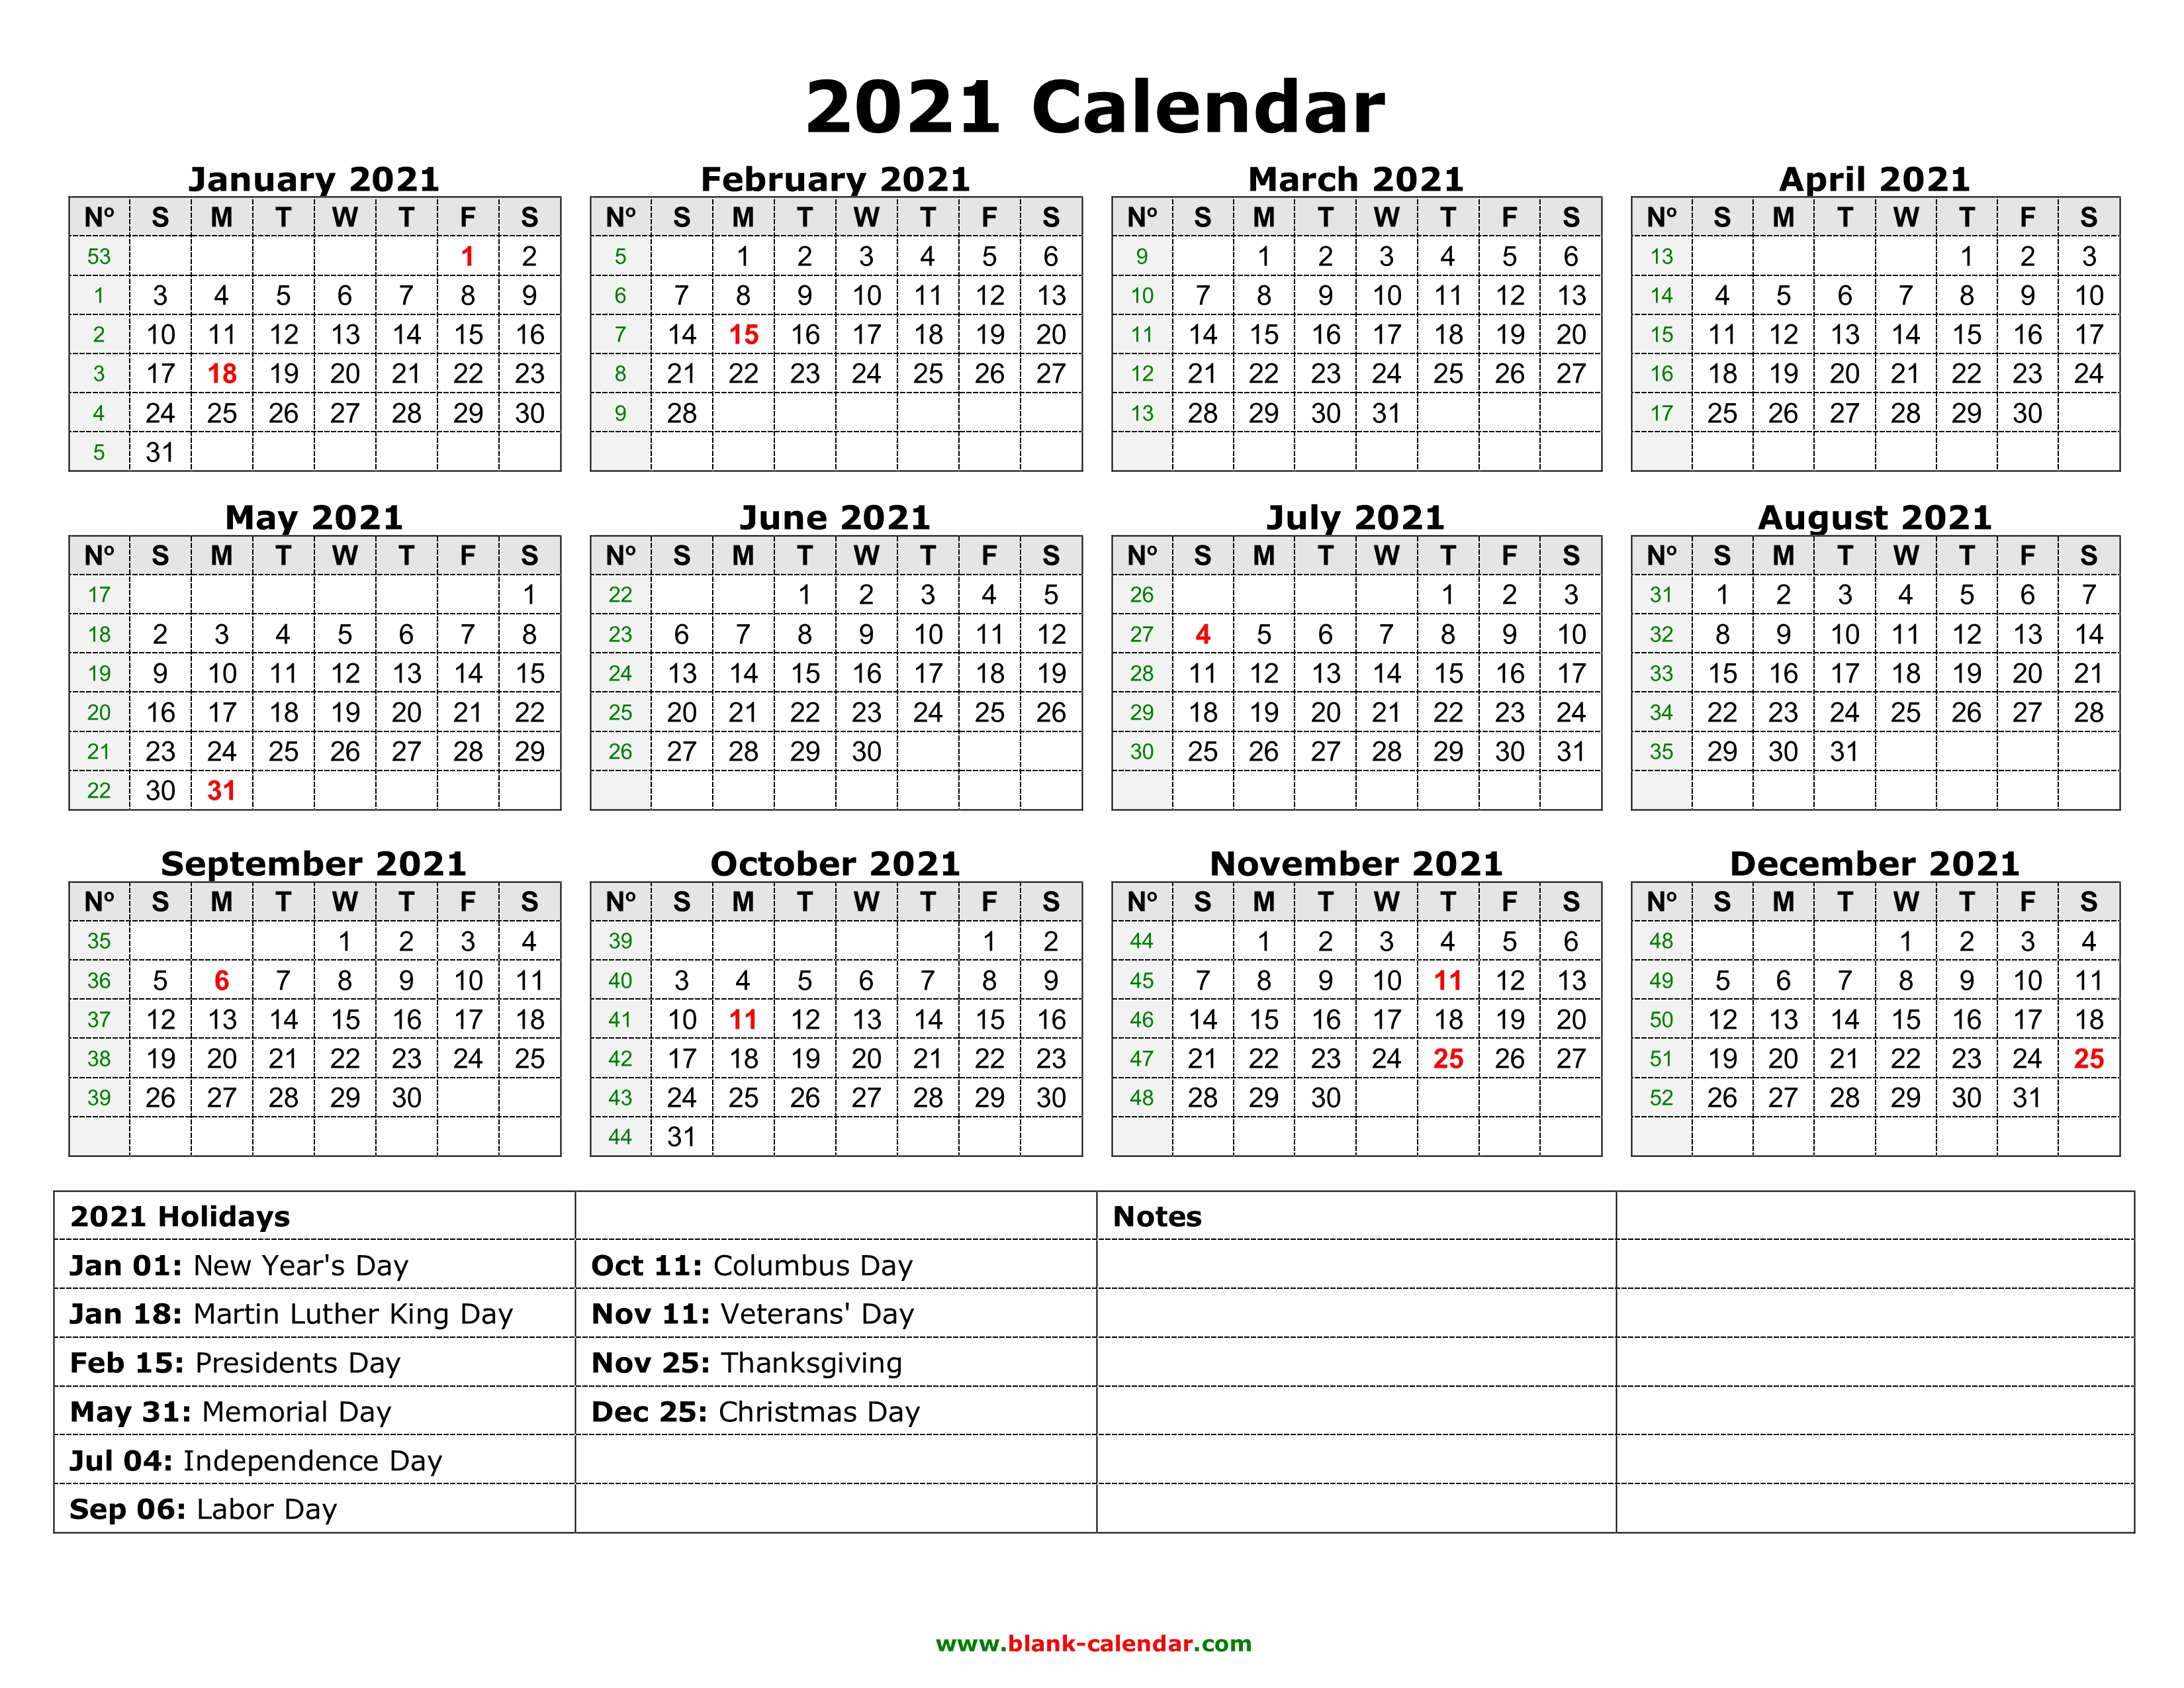 Blank 2021 Calendar Customize and Print